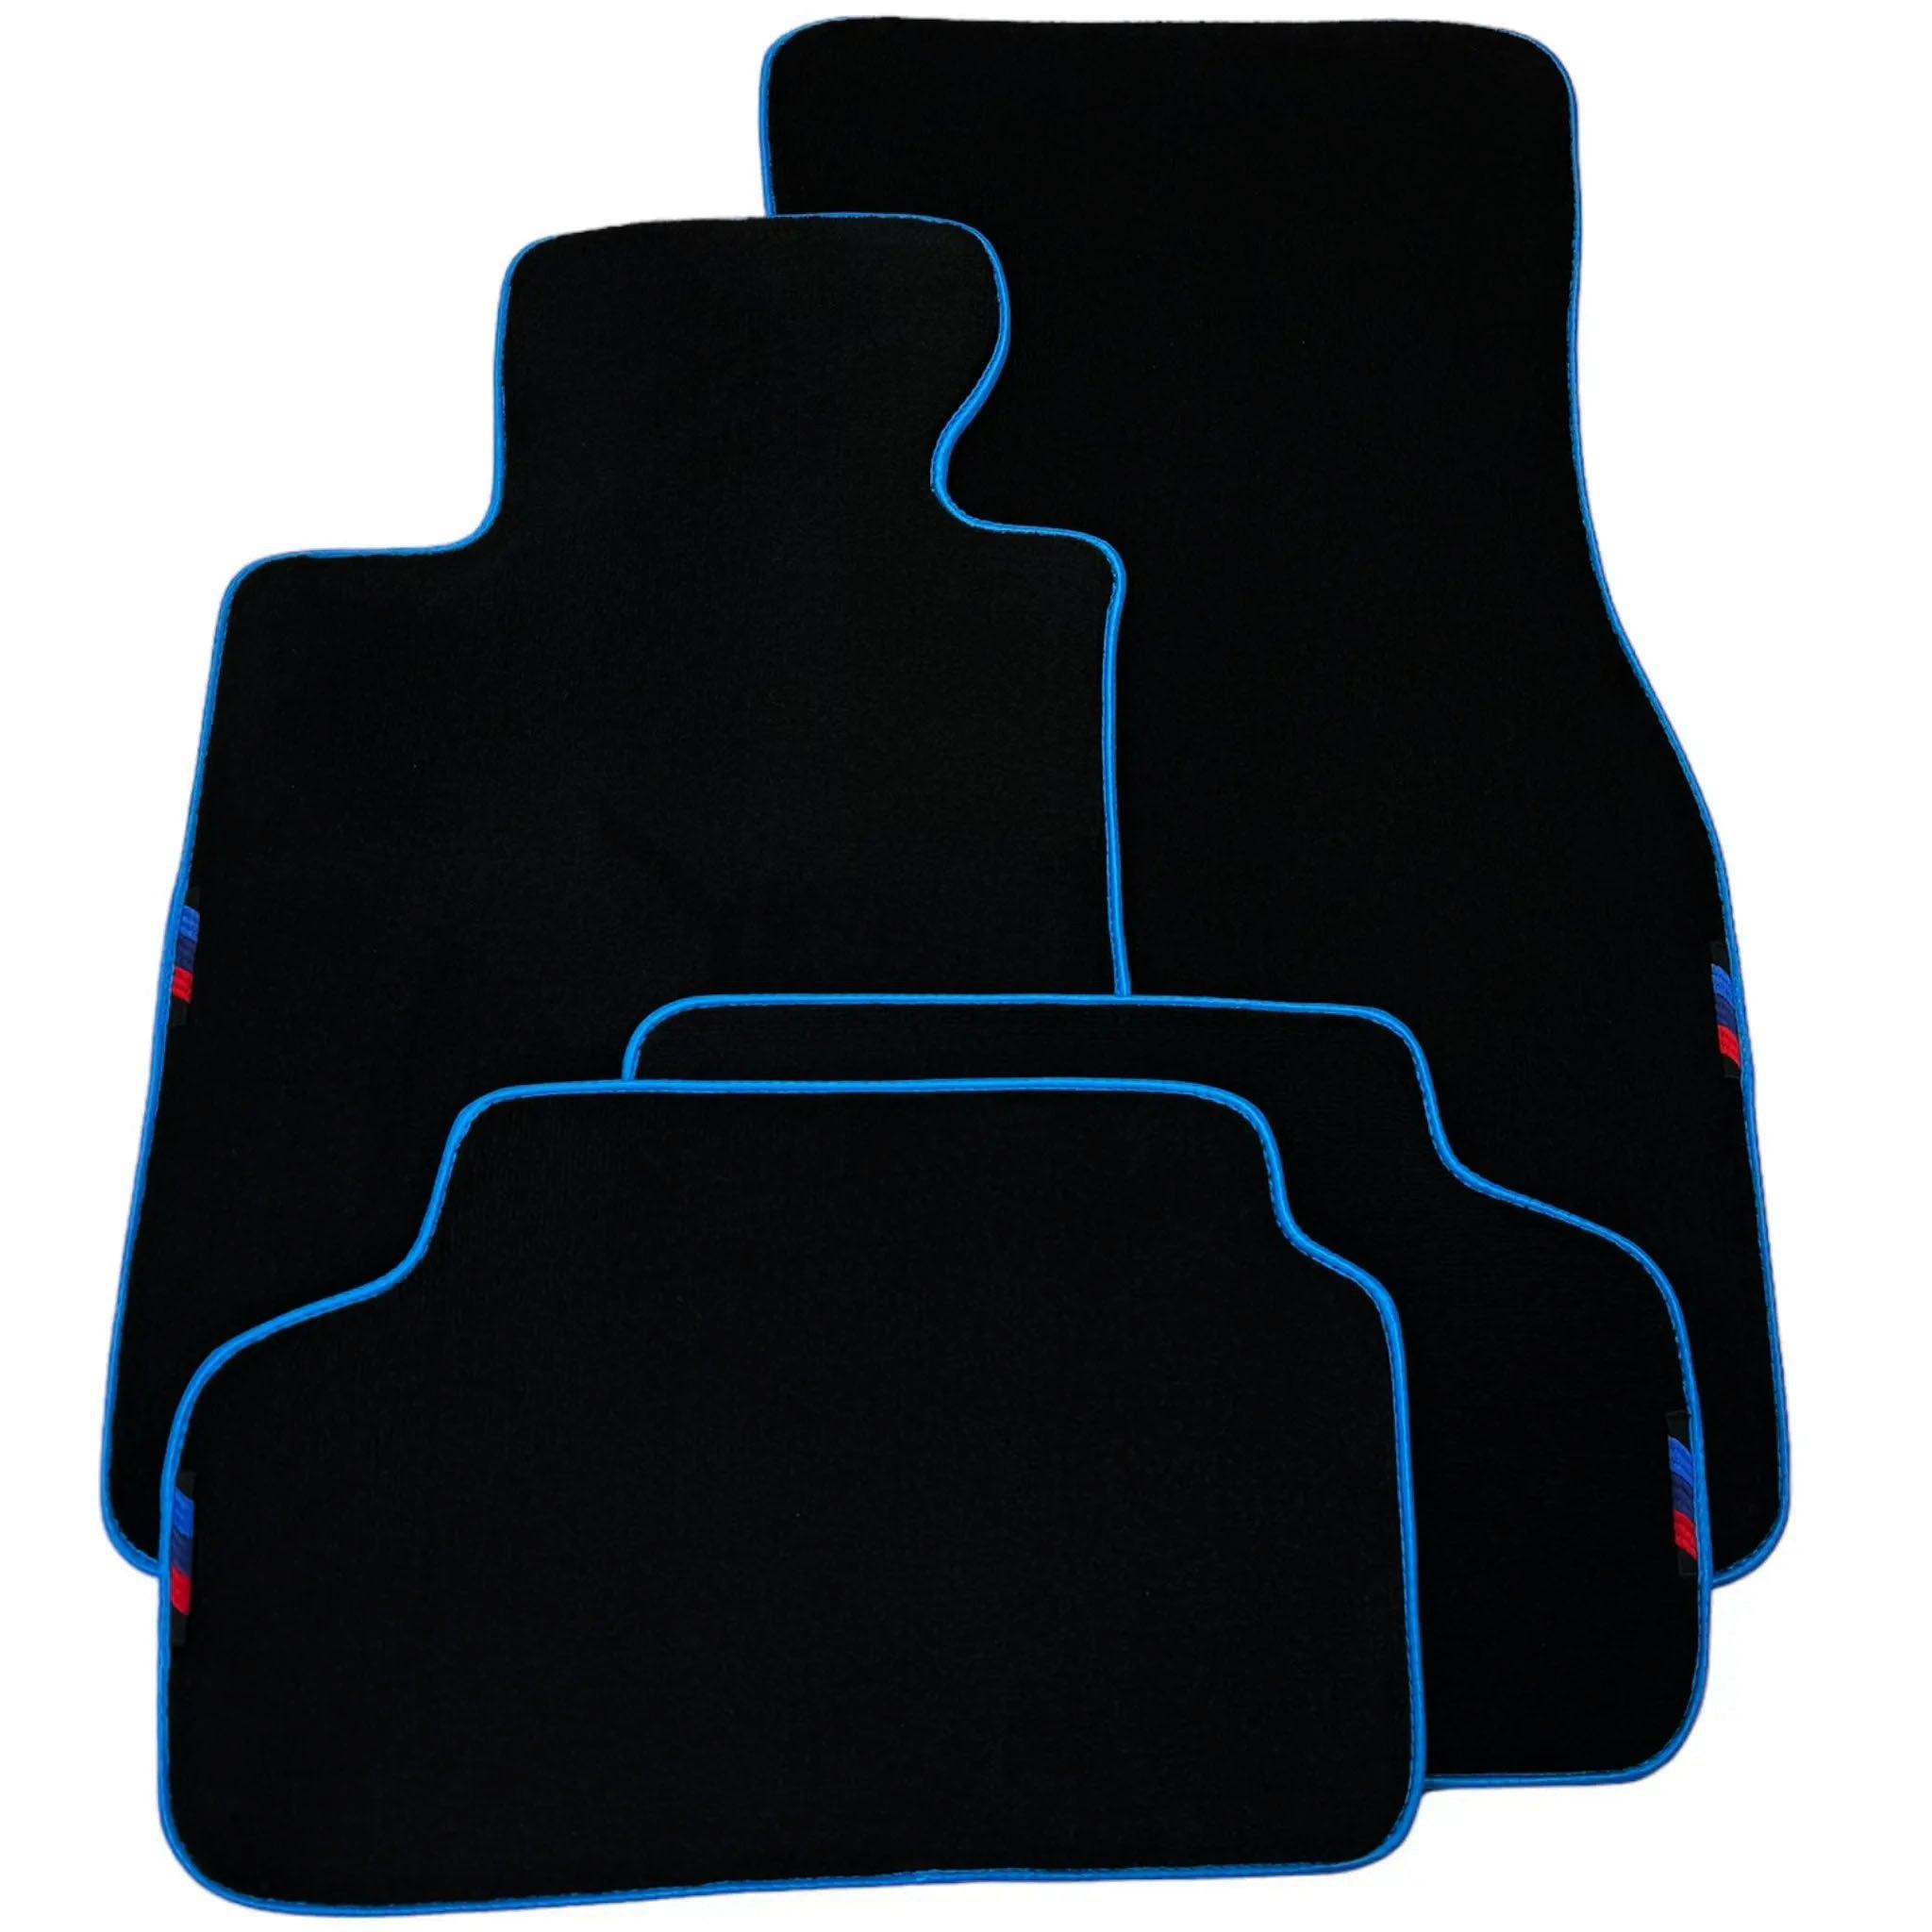 Black Floor Floor Mats For BMW 6 Series G32 GT Gran Turismo | Fighter Jet Edition AutoWin Brand |Sky Blue Trim